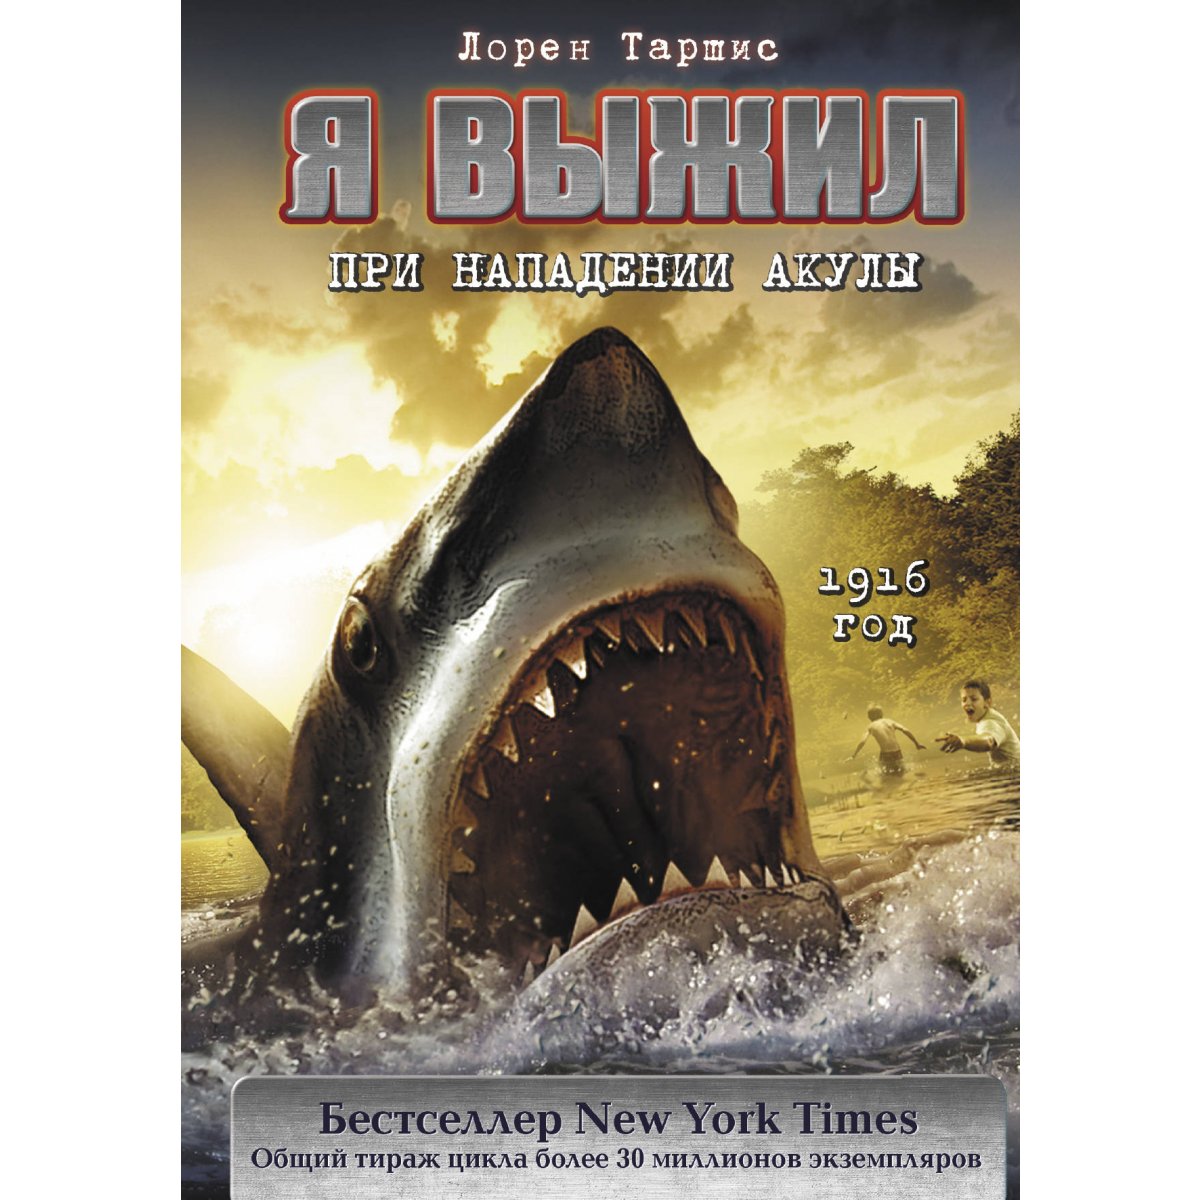 Нападение книга. Книга акула. Я выжил при нападении акулы. Художественная литература про акул.